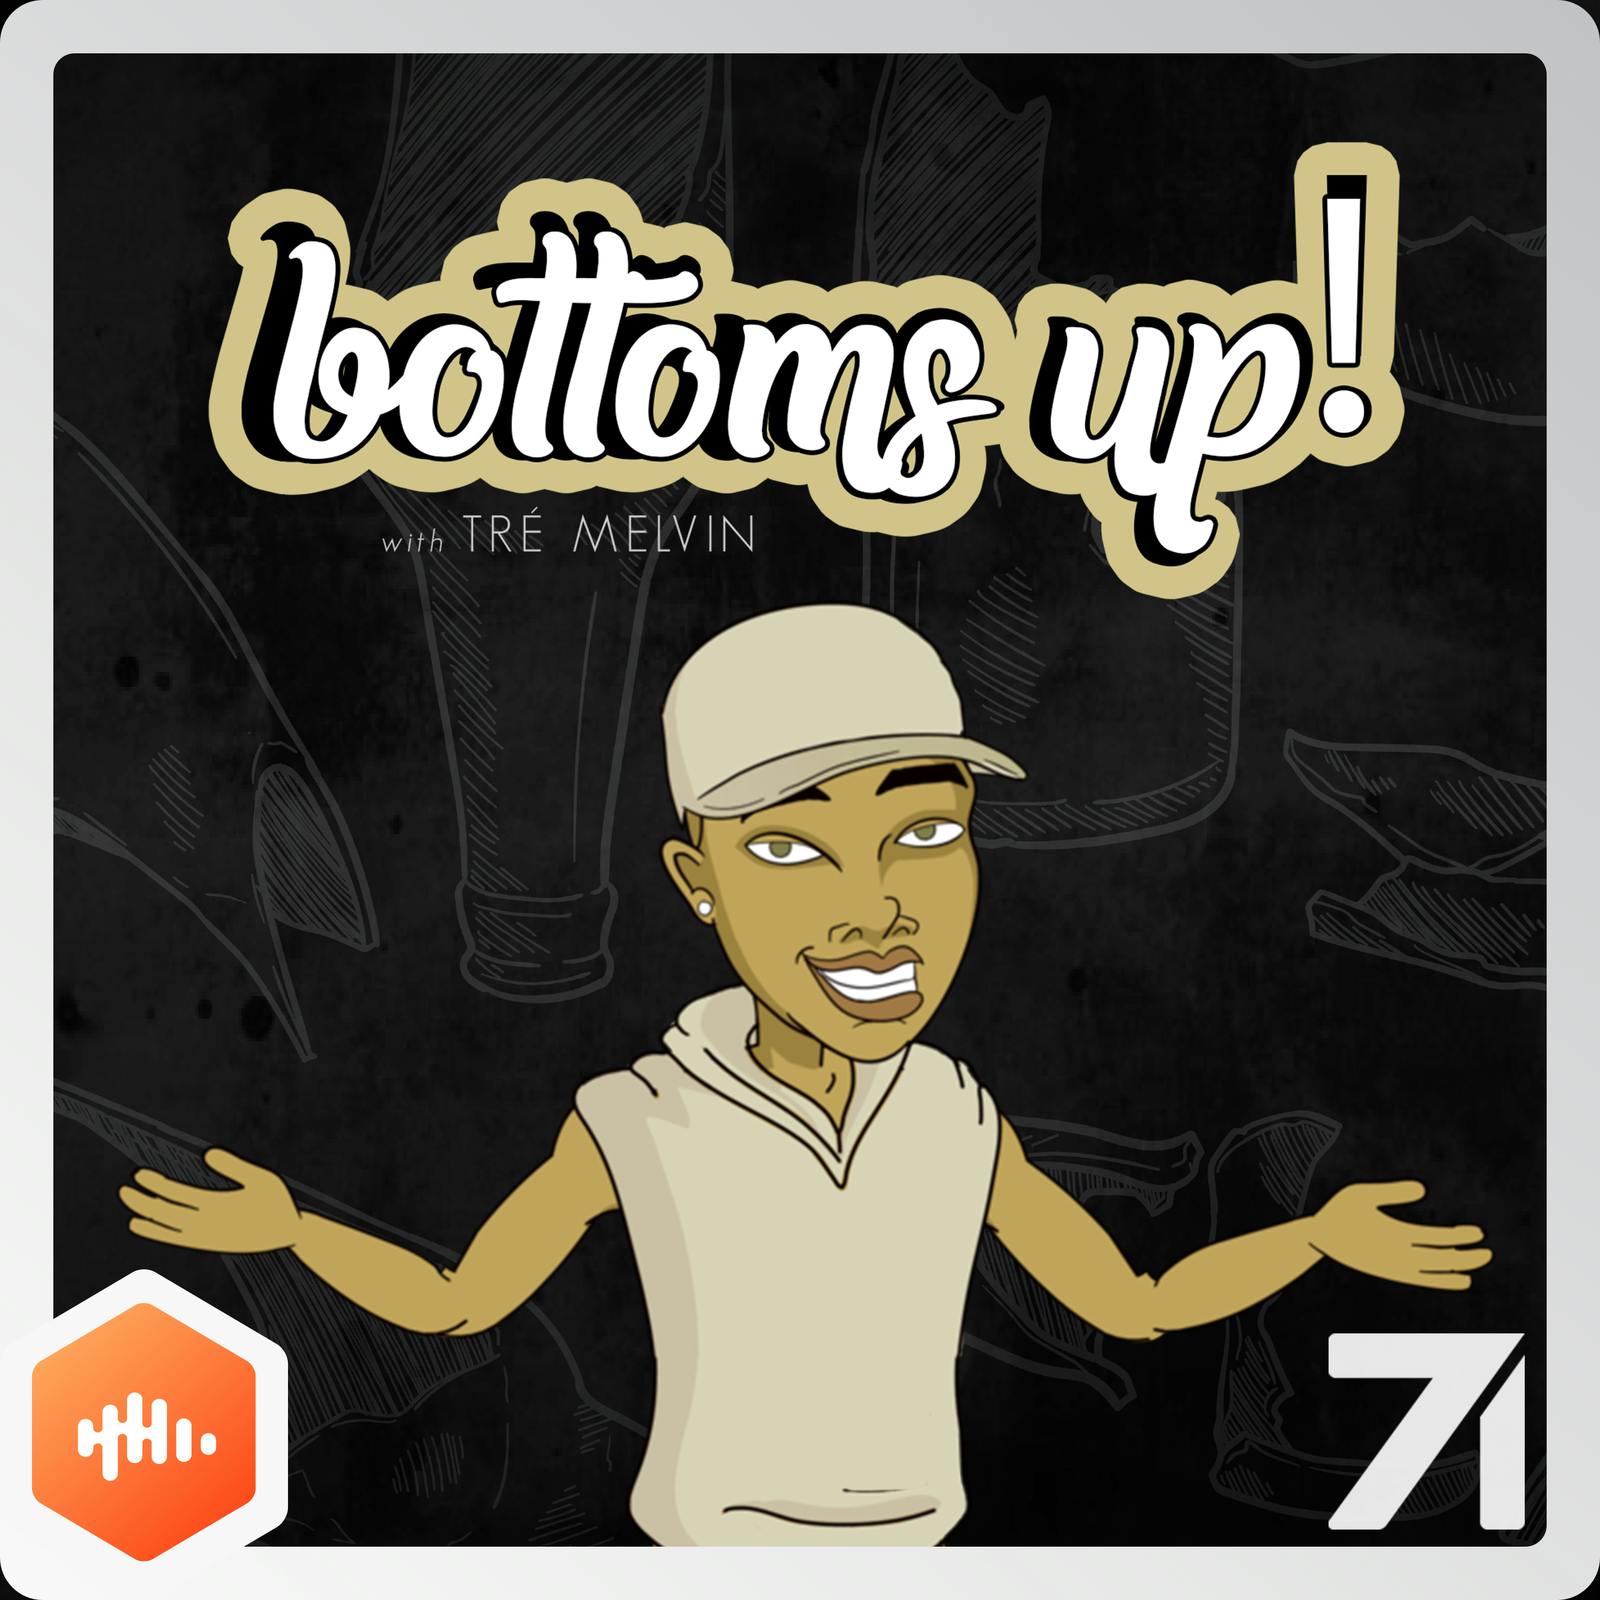 5: Sparkling Plan B (feat. Diamond White) - Bottoms Up! with Tré Melvin